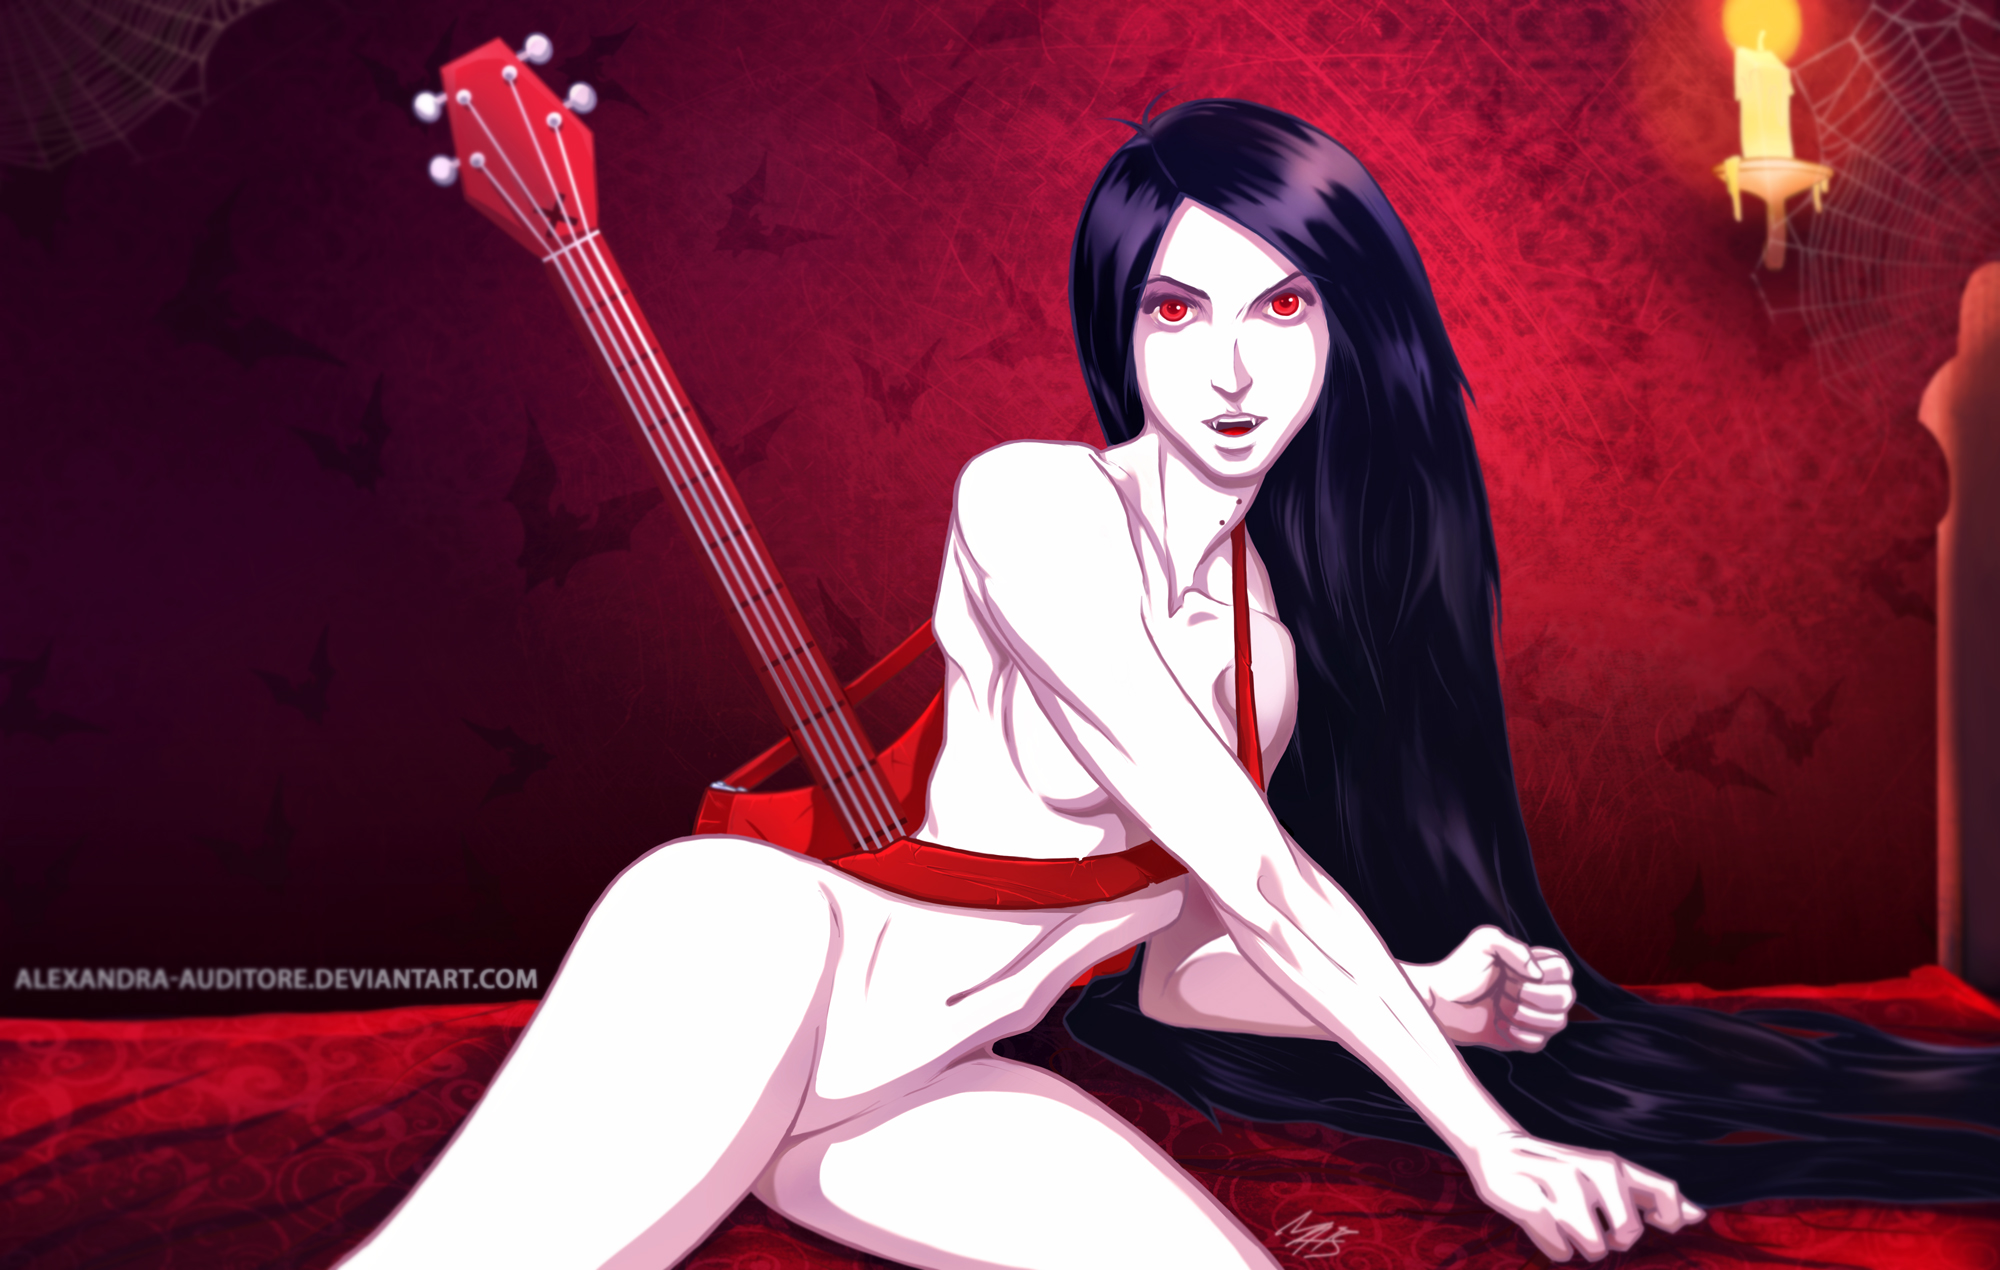 Sexy Vampire Lady By Alexandra Auditore On Deviantart